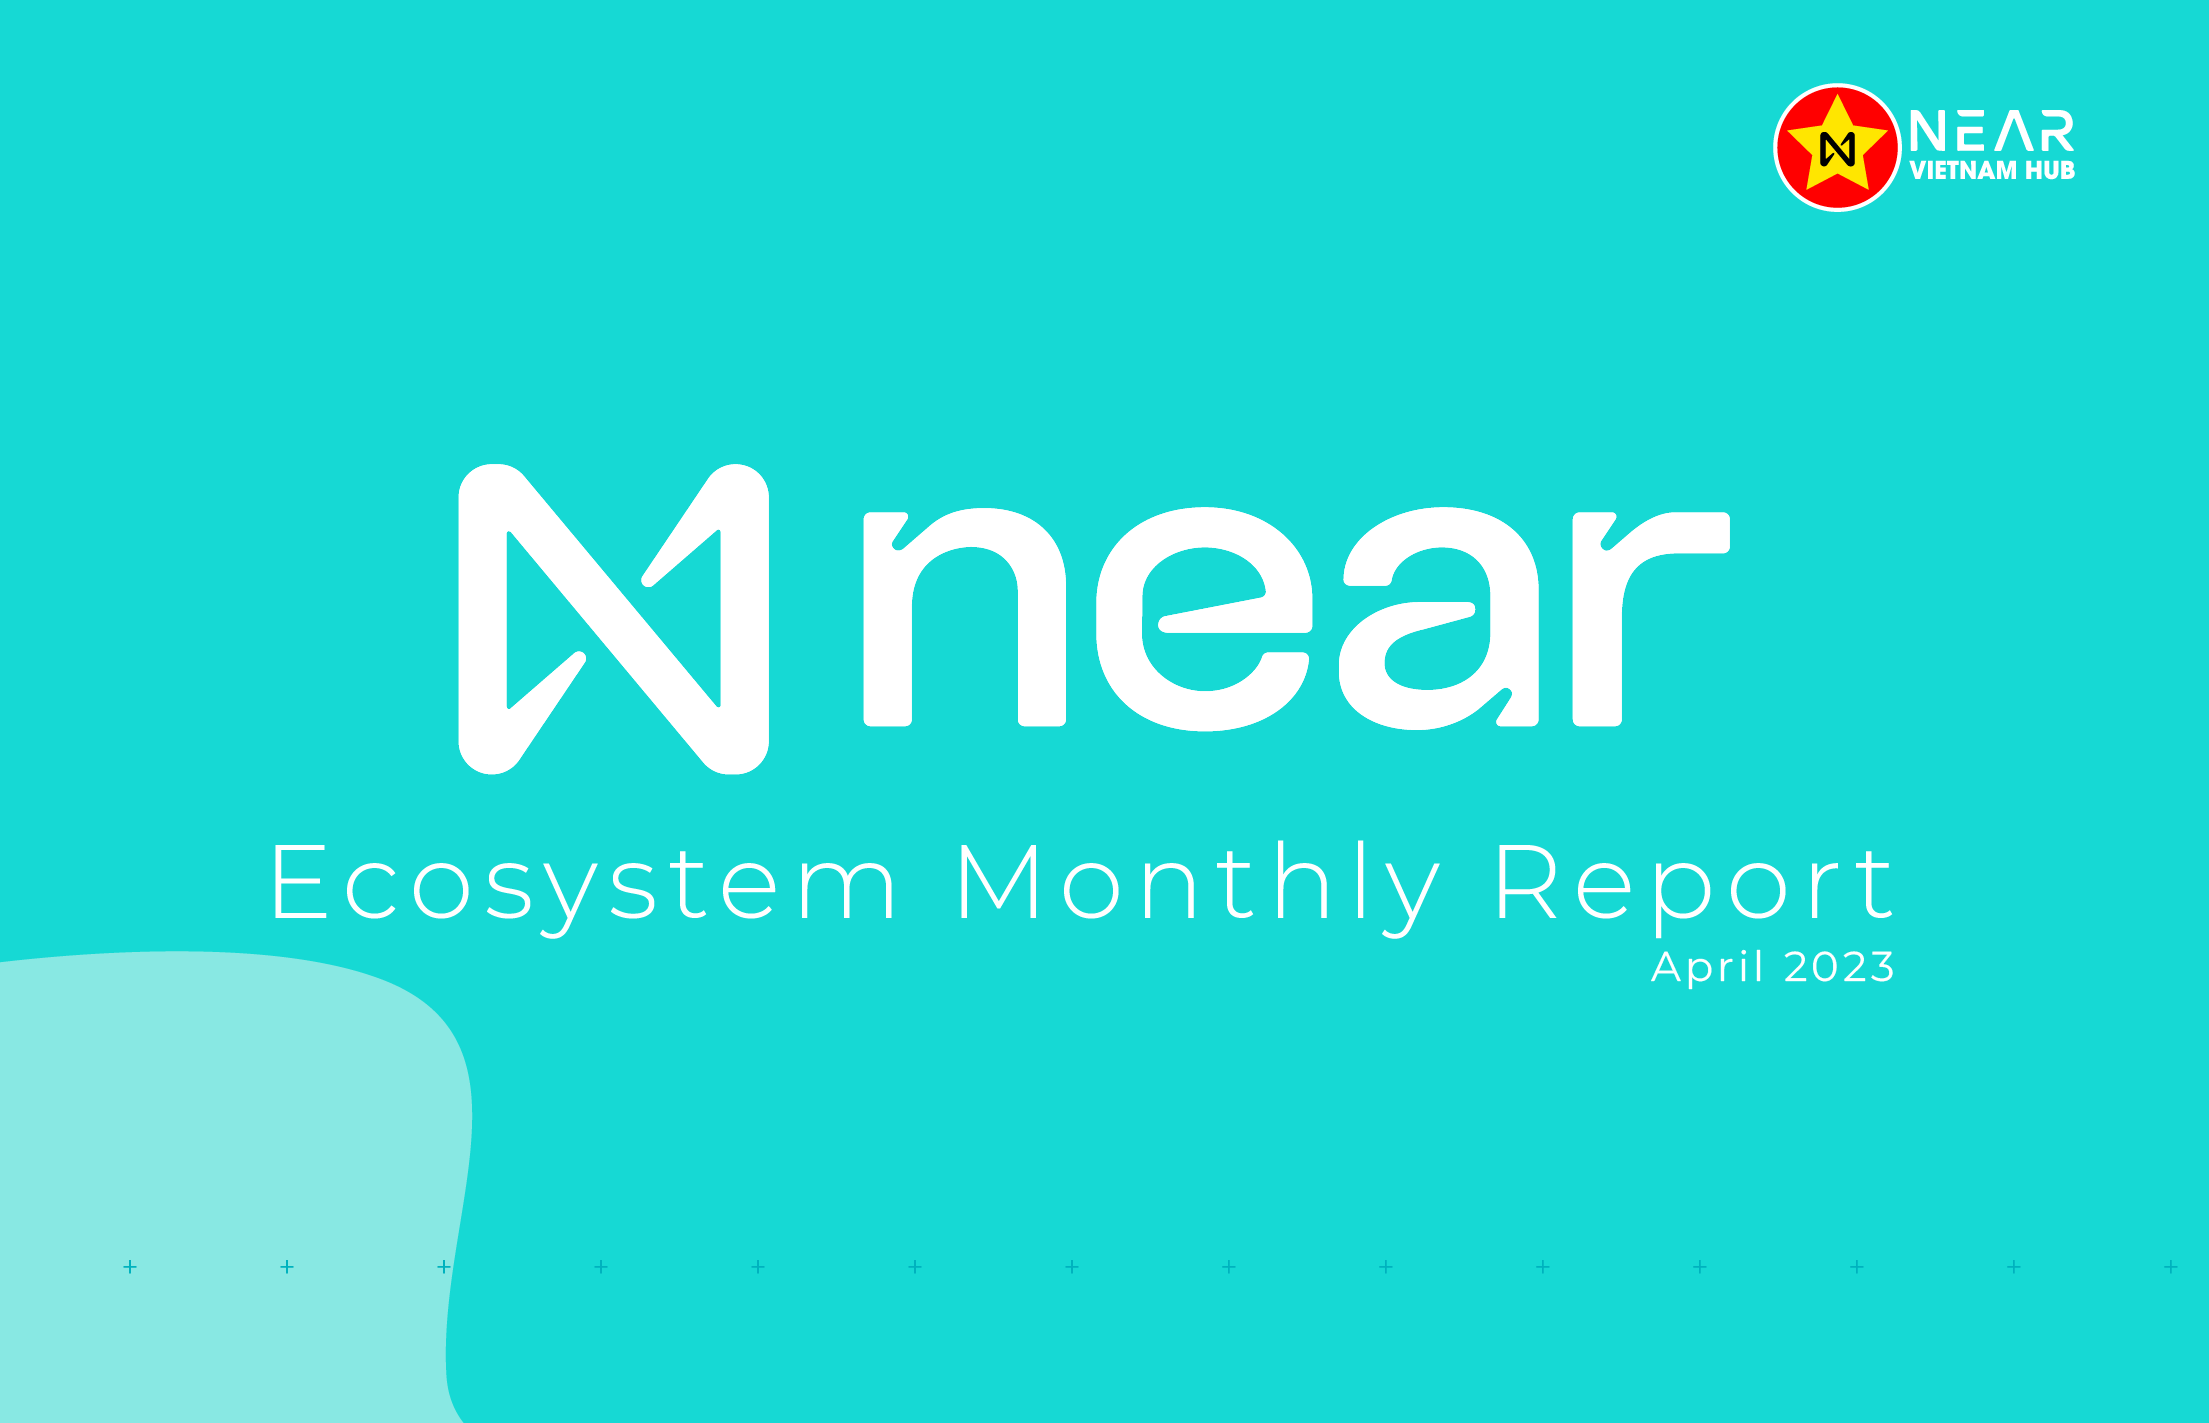 NEAR ecosystem report april 2023